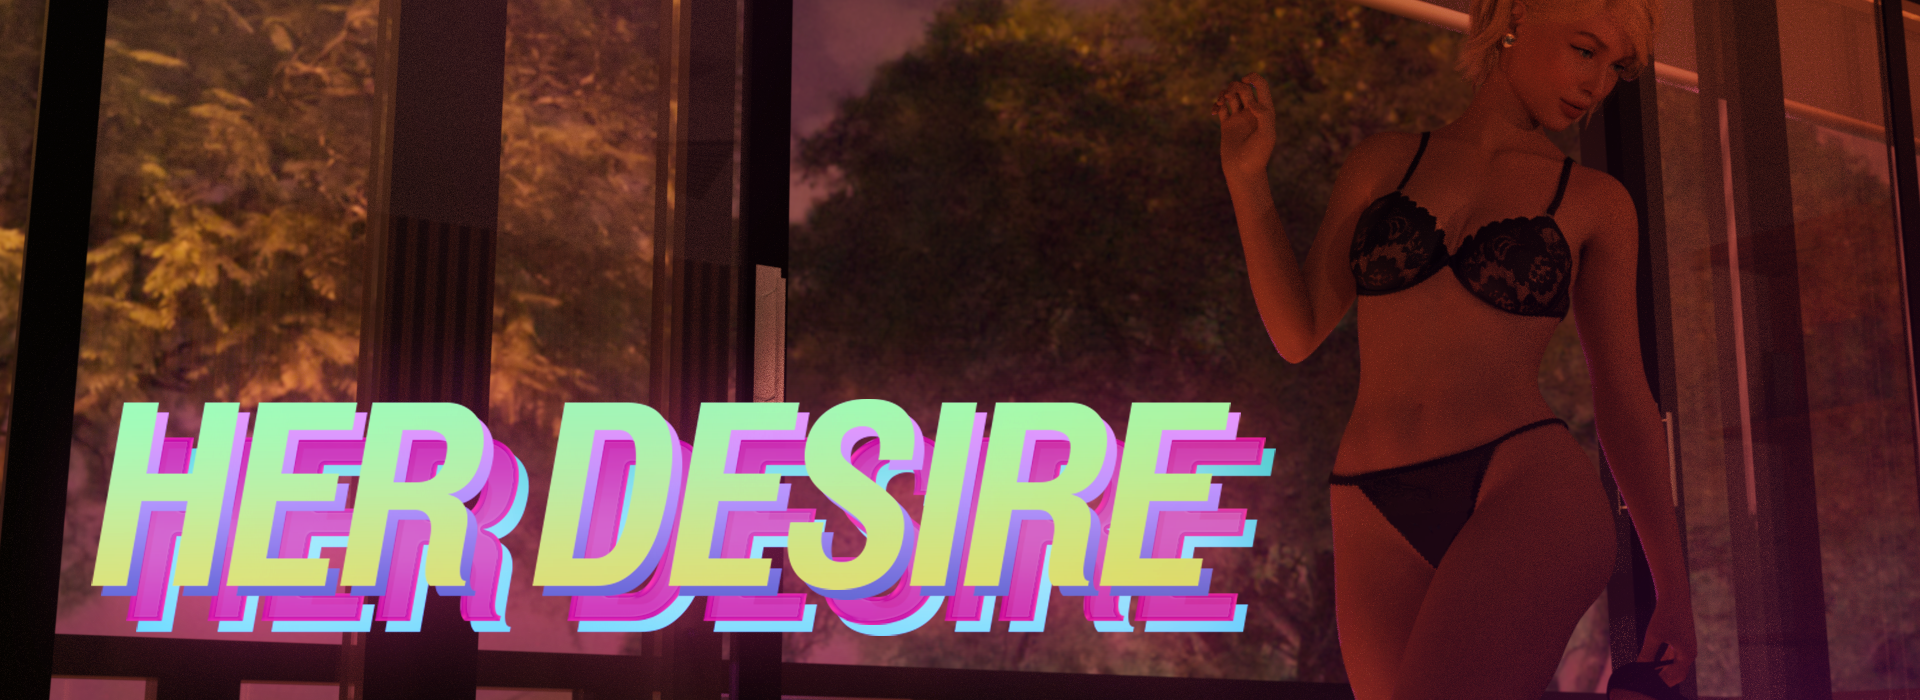 Her Desire1.png